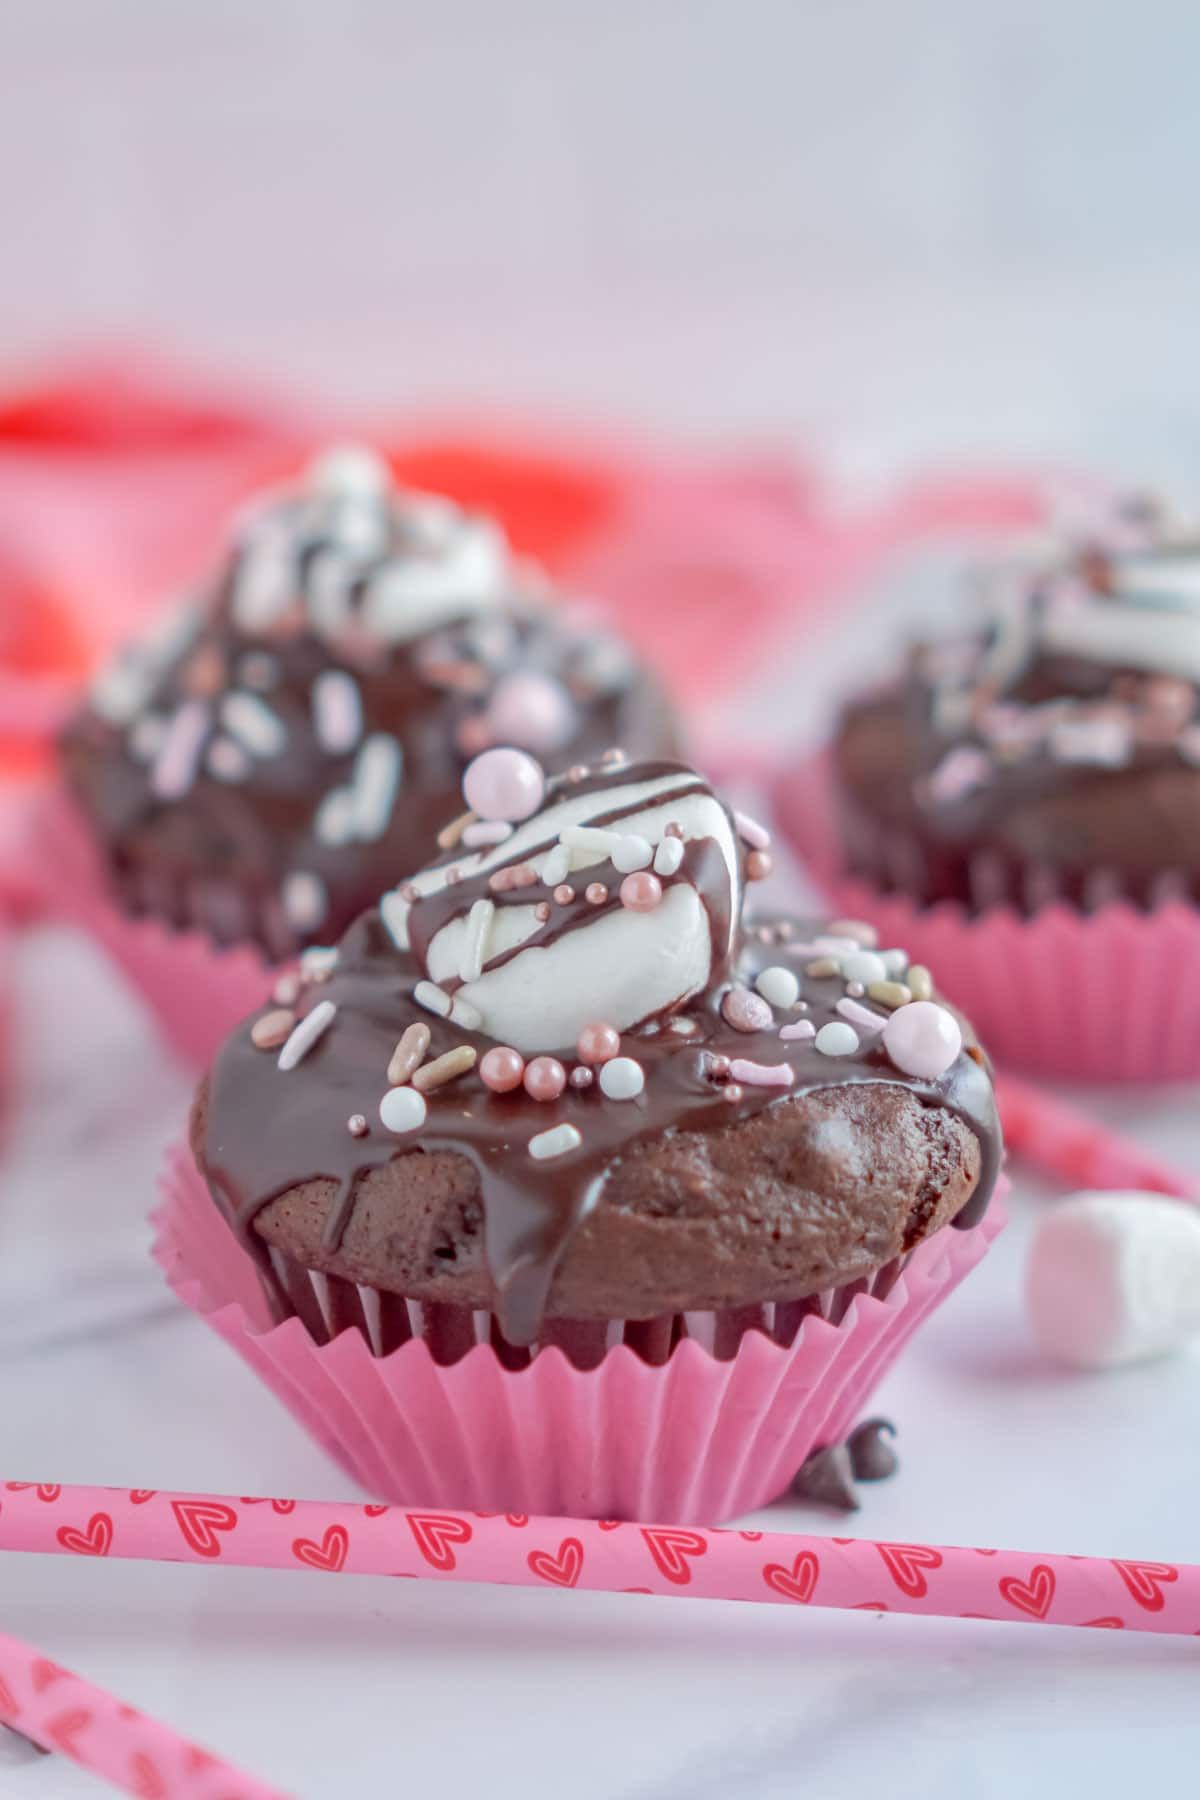 Cupcakes de chocolate quente decorados para o dia dos namorados